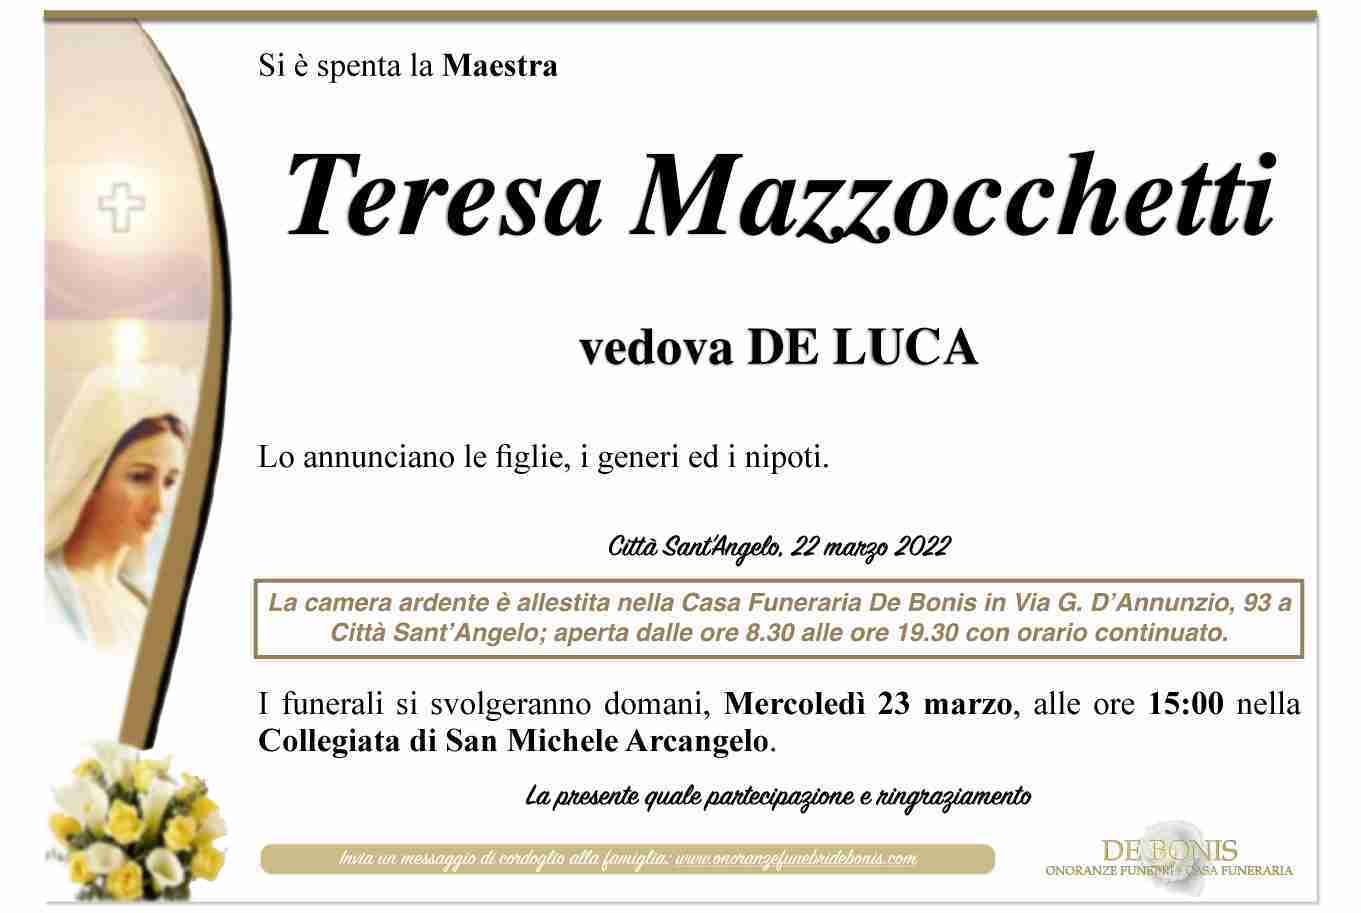 Teresa Mazzocchetti